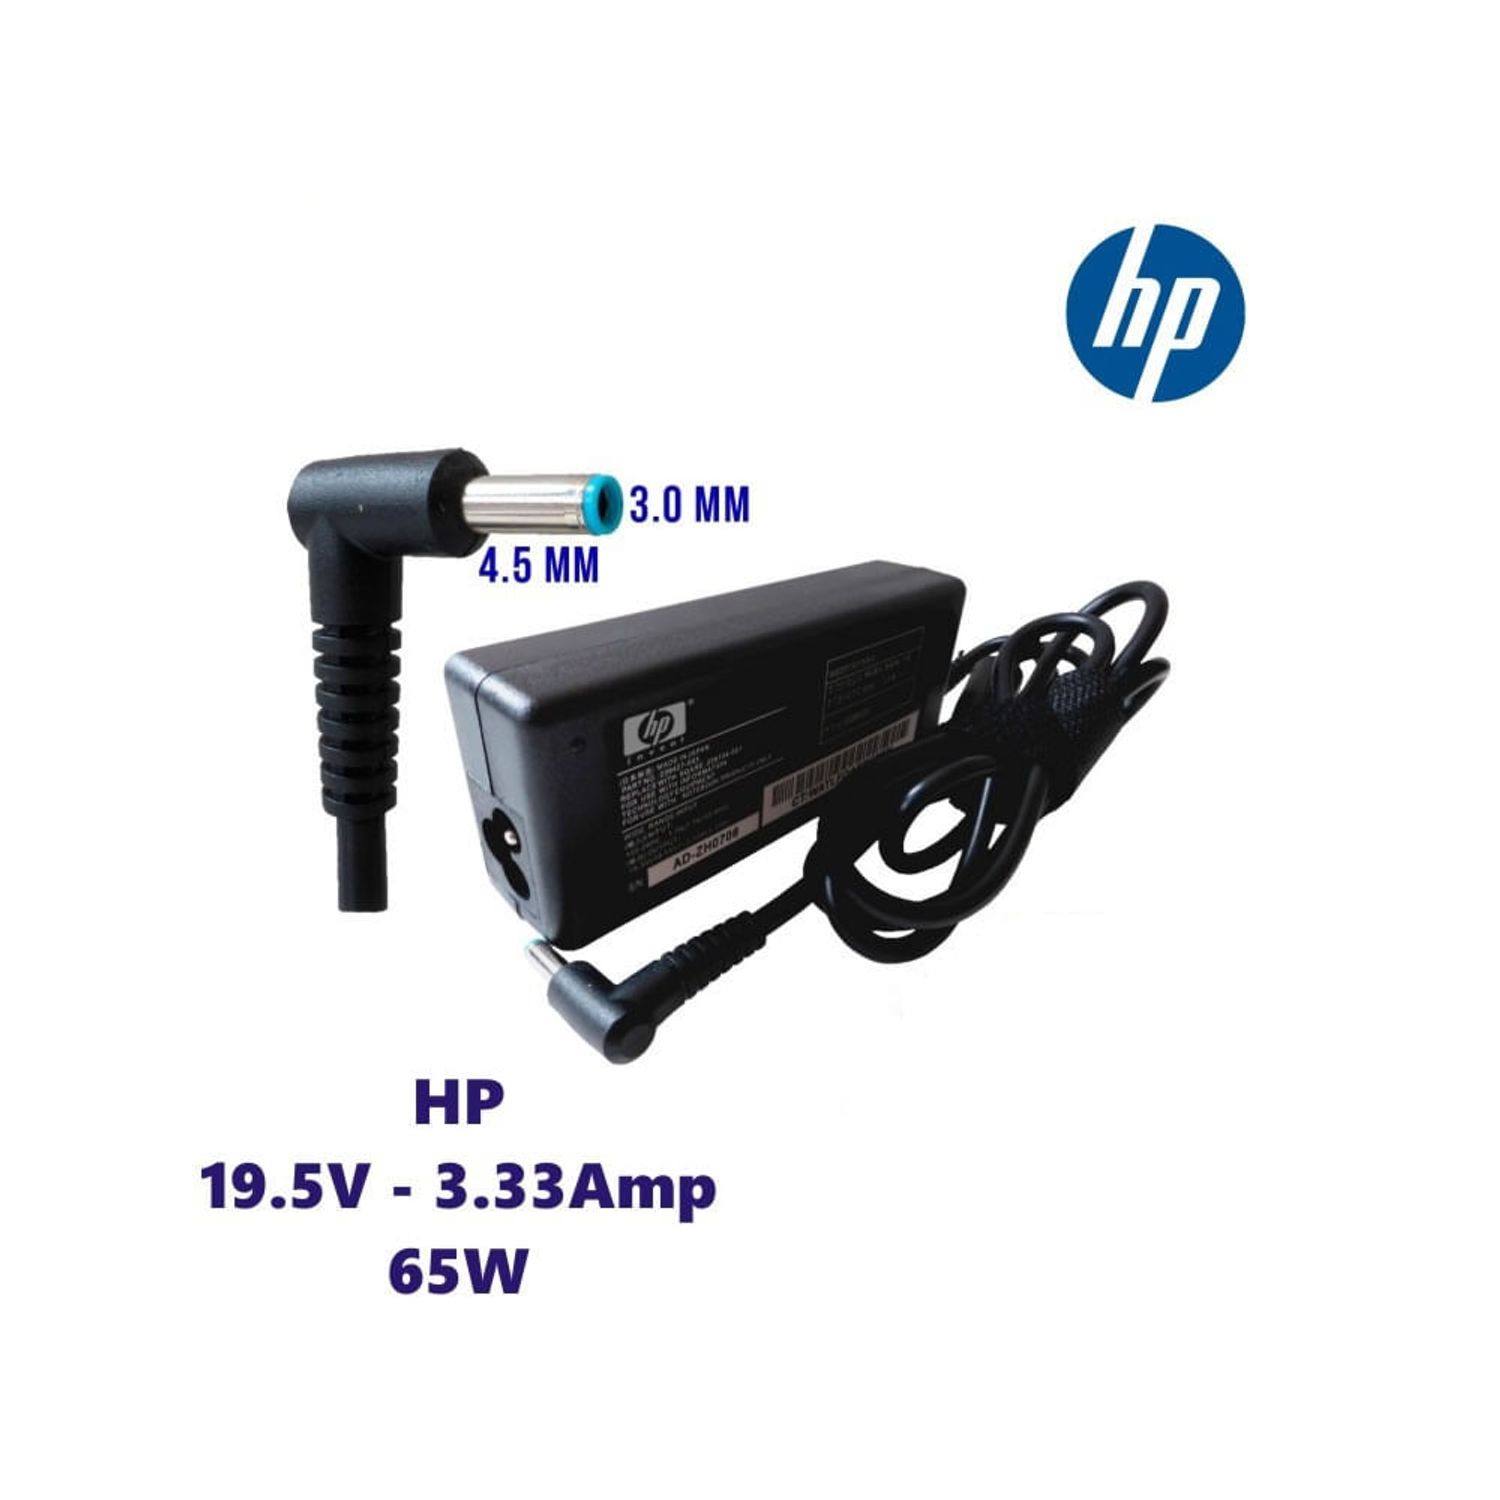 CARGADOR HP 19.5V – 3.33A (PUNTA CELESTE) – 65W – Tecnosal Sv